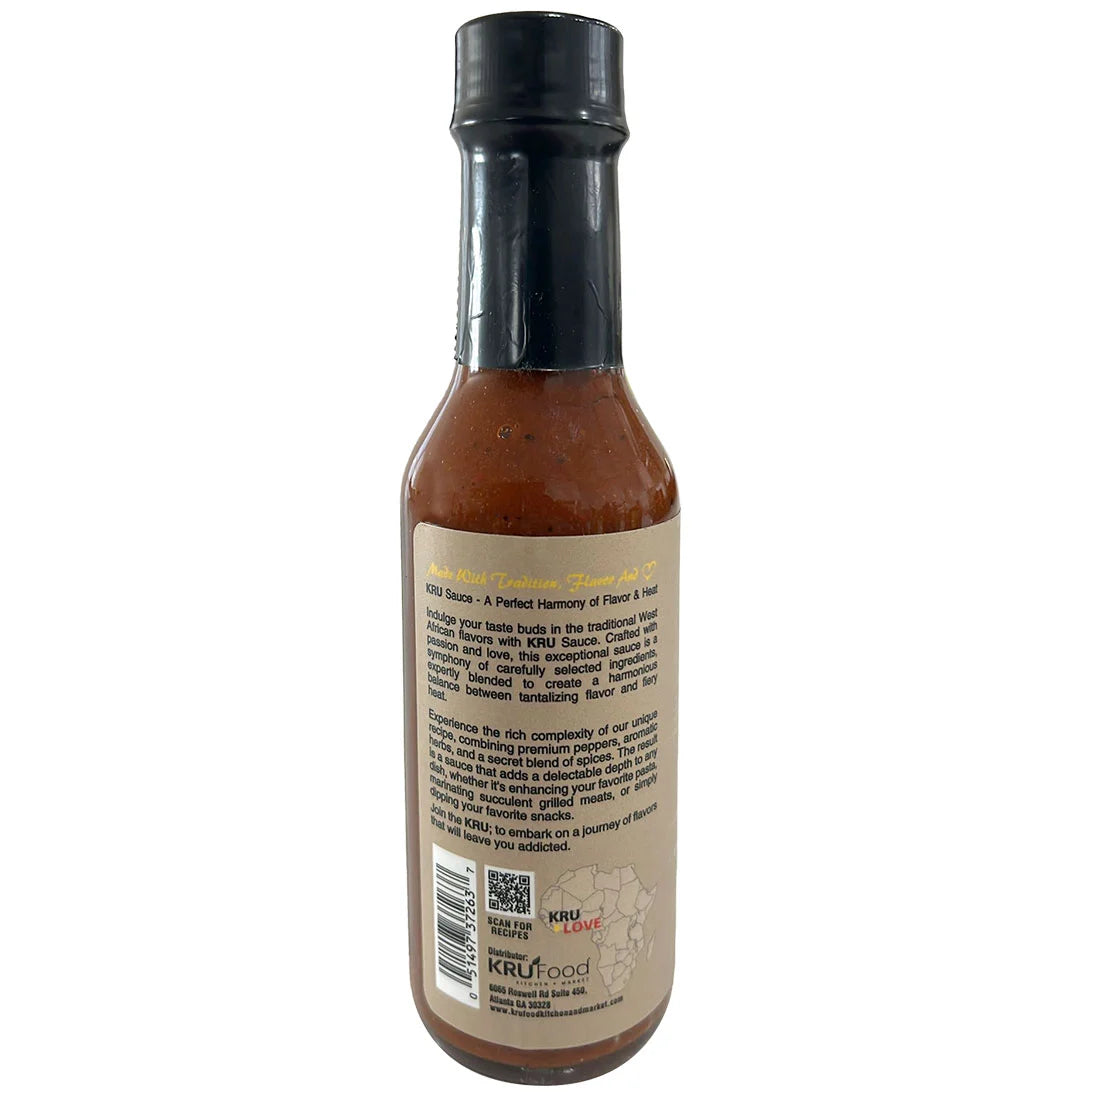 The “Classic” Plant-based KRU Sauce